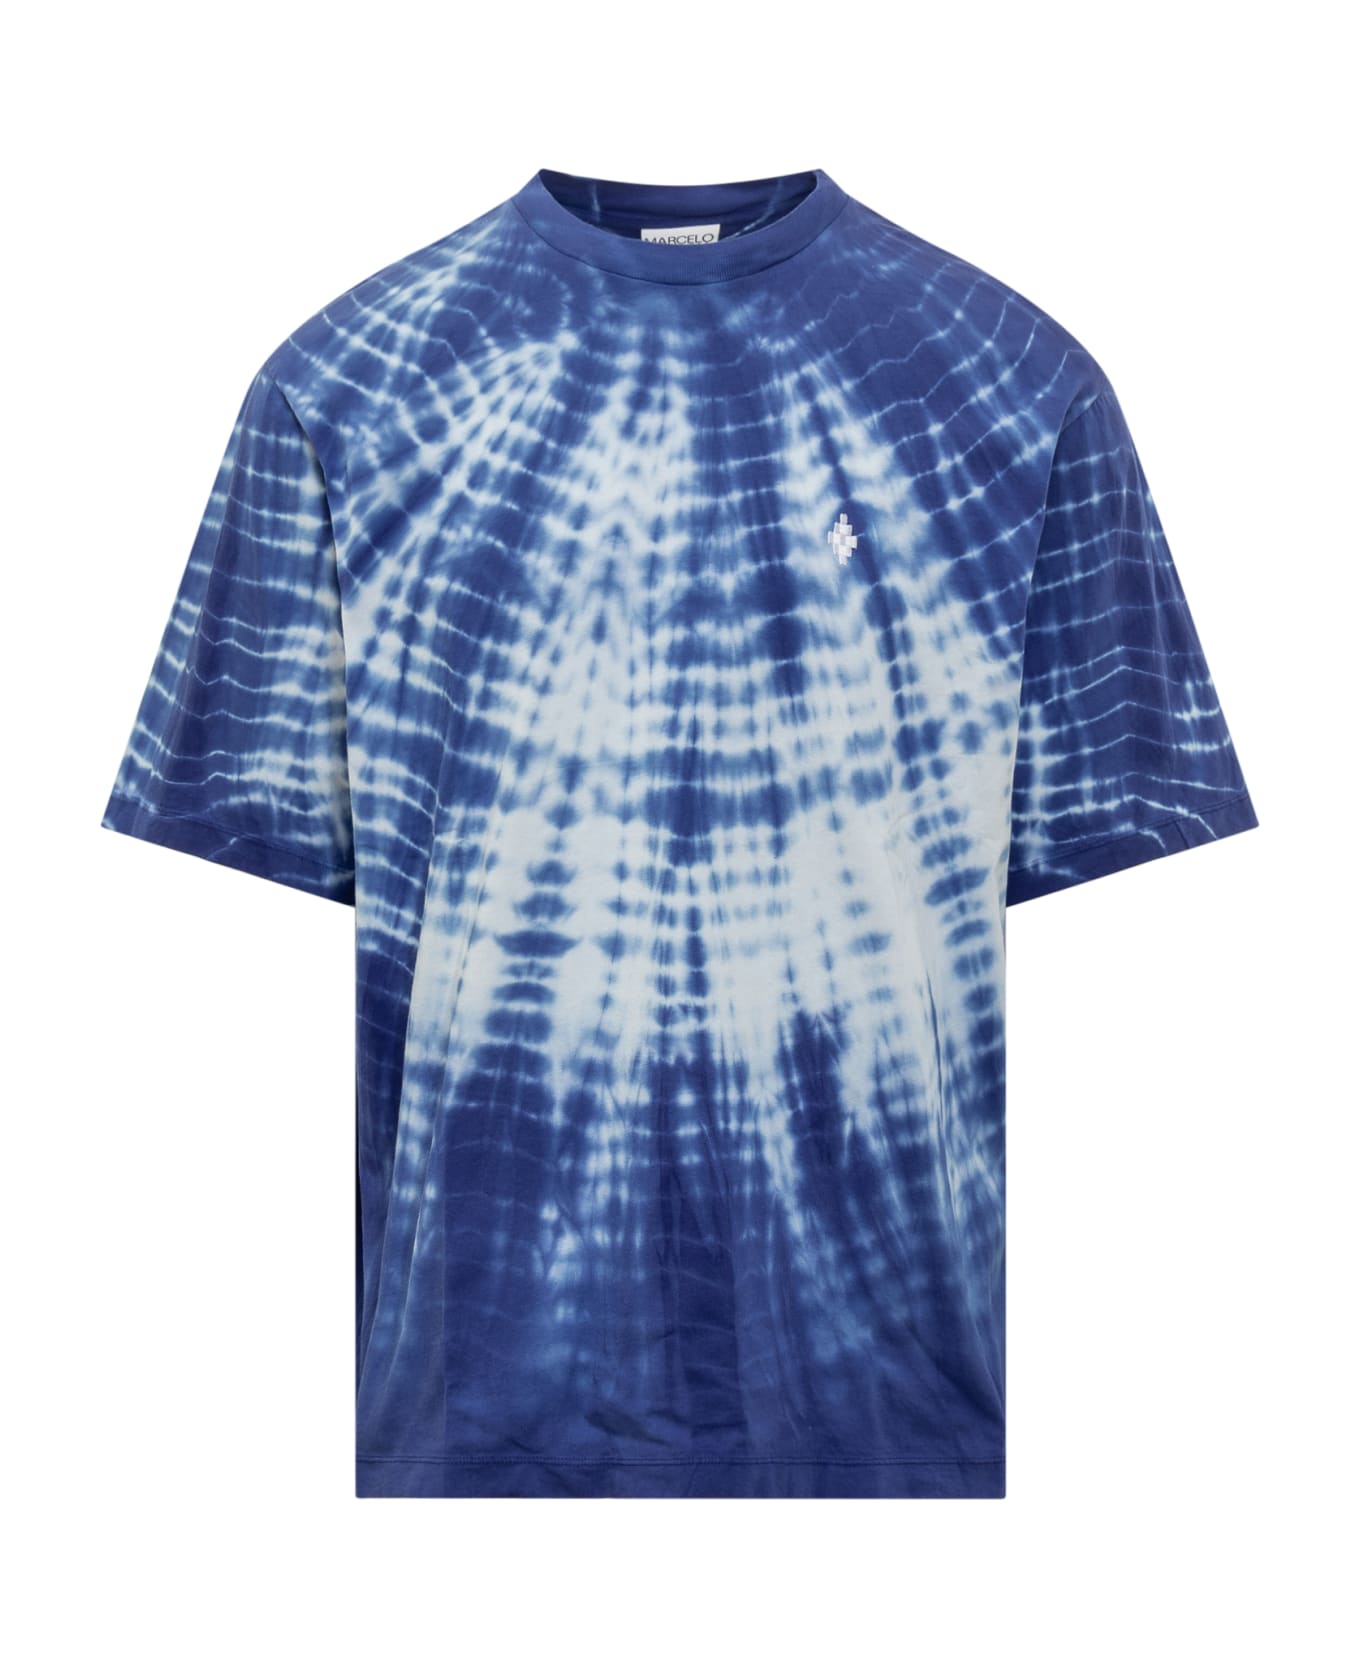 Marcelo Burlon Soundwaves T-shirt - BLUE WHITE